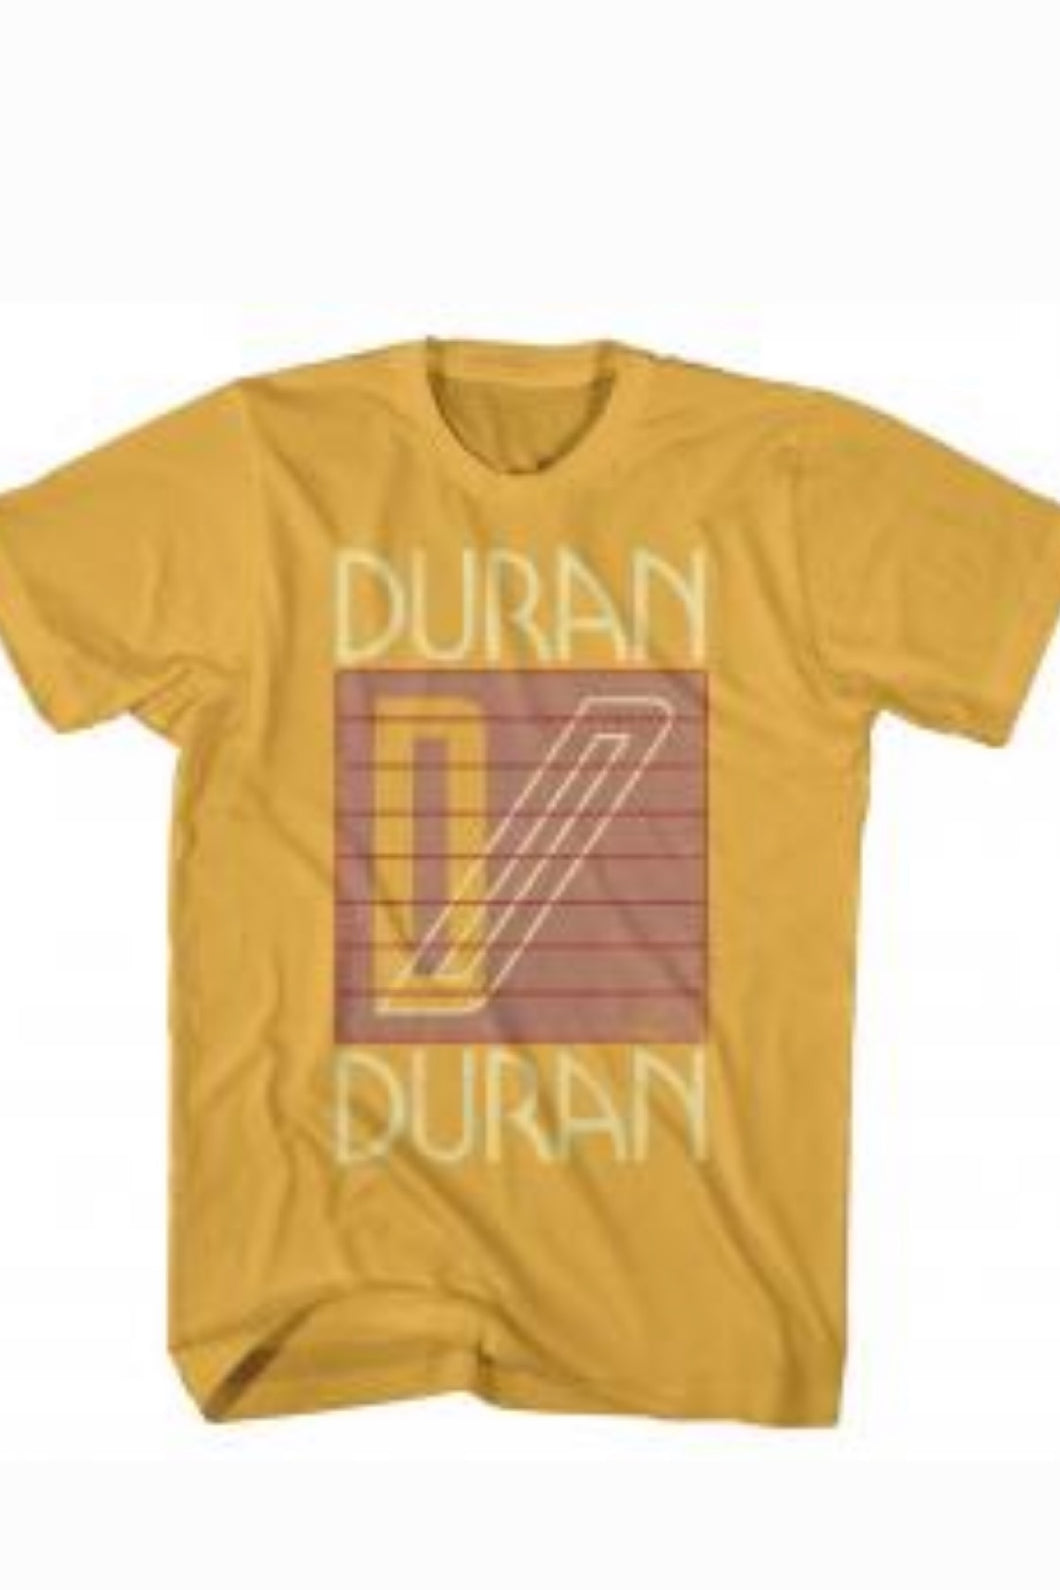 Duran Duran Throwback Vintage Graphic